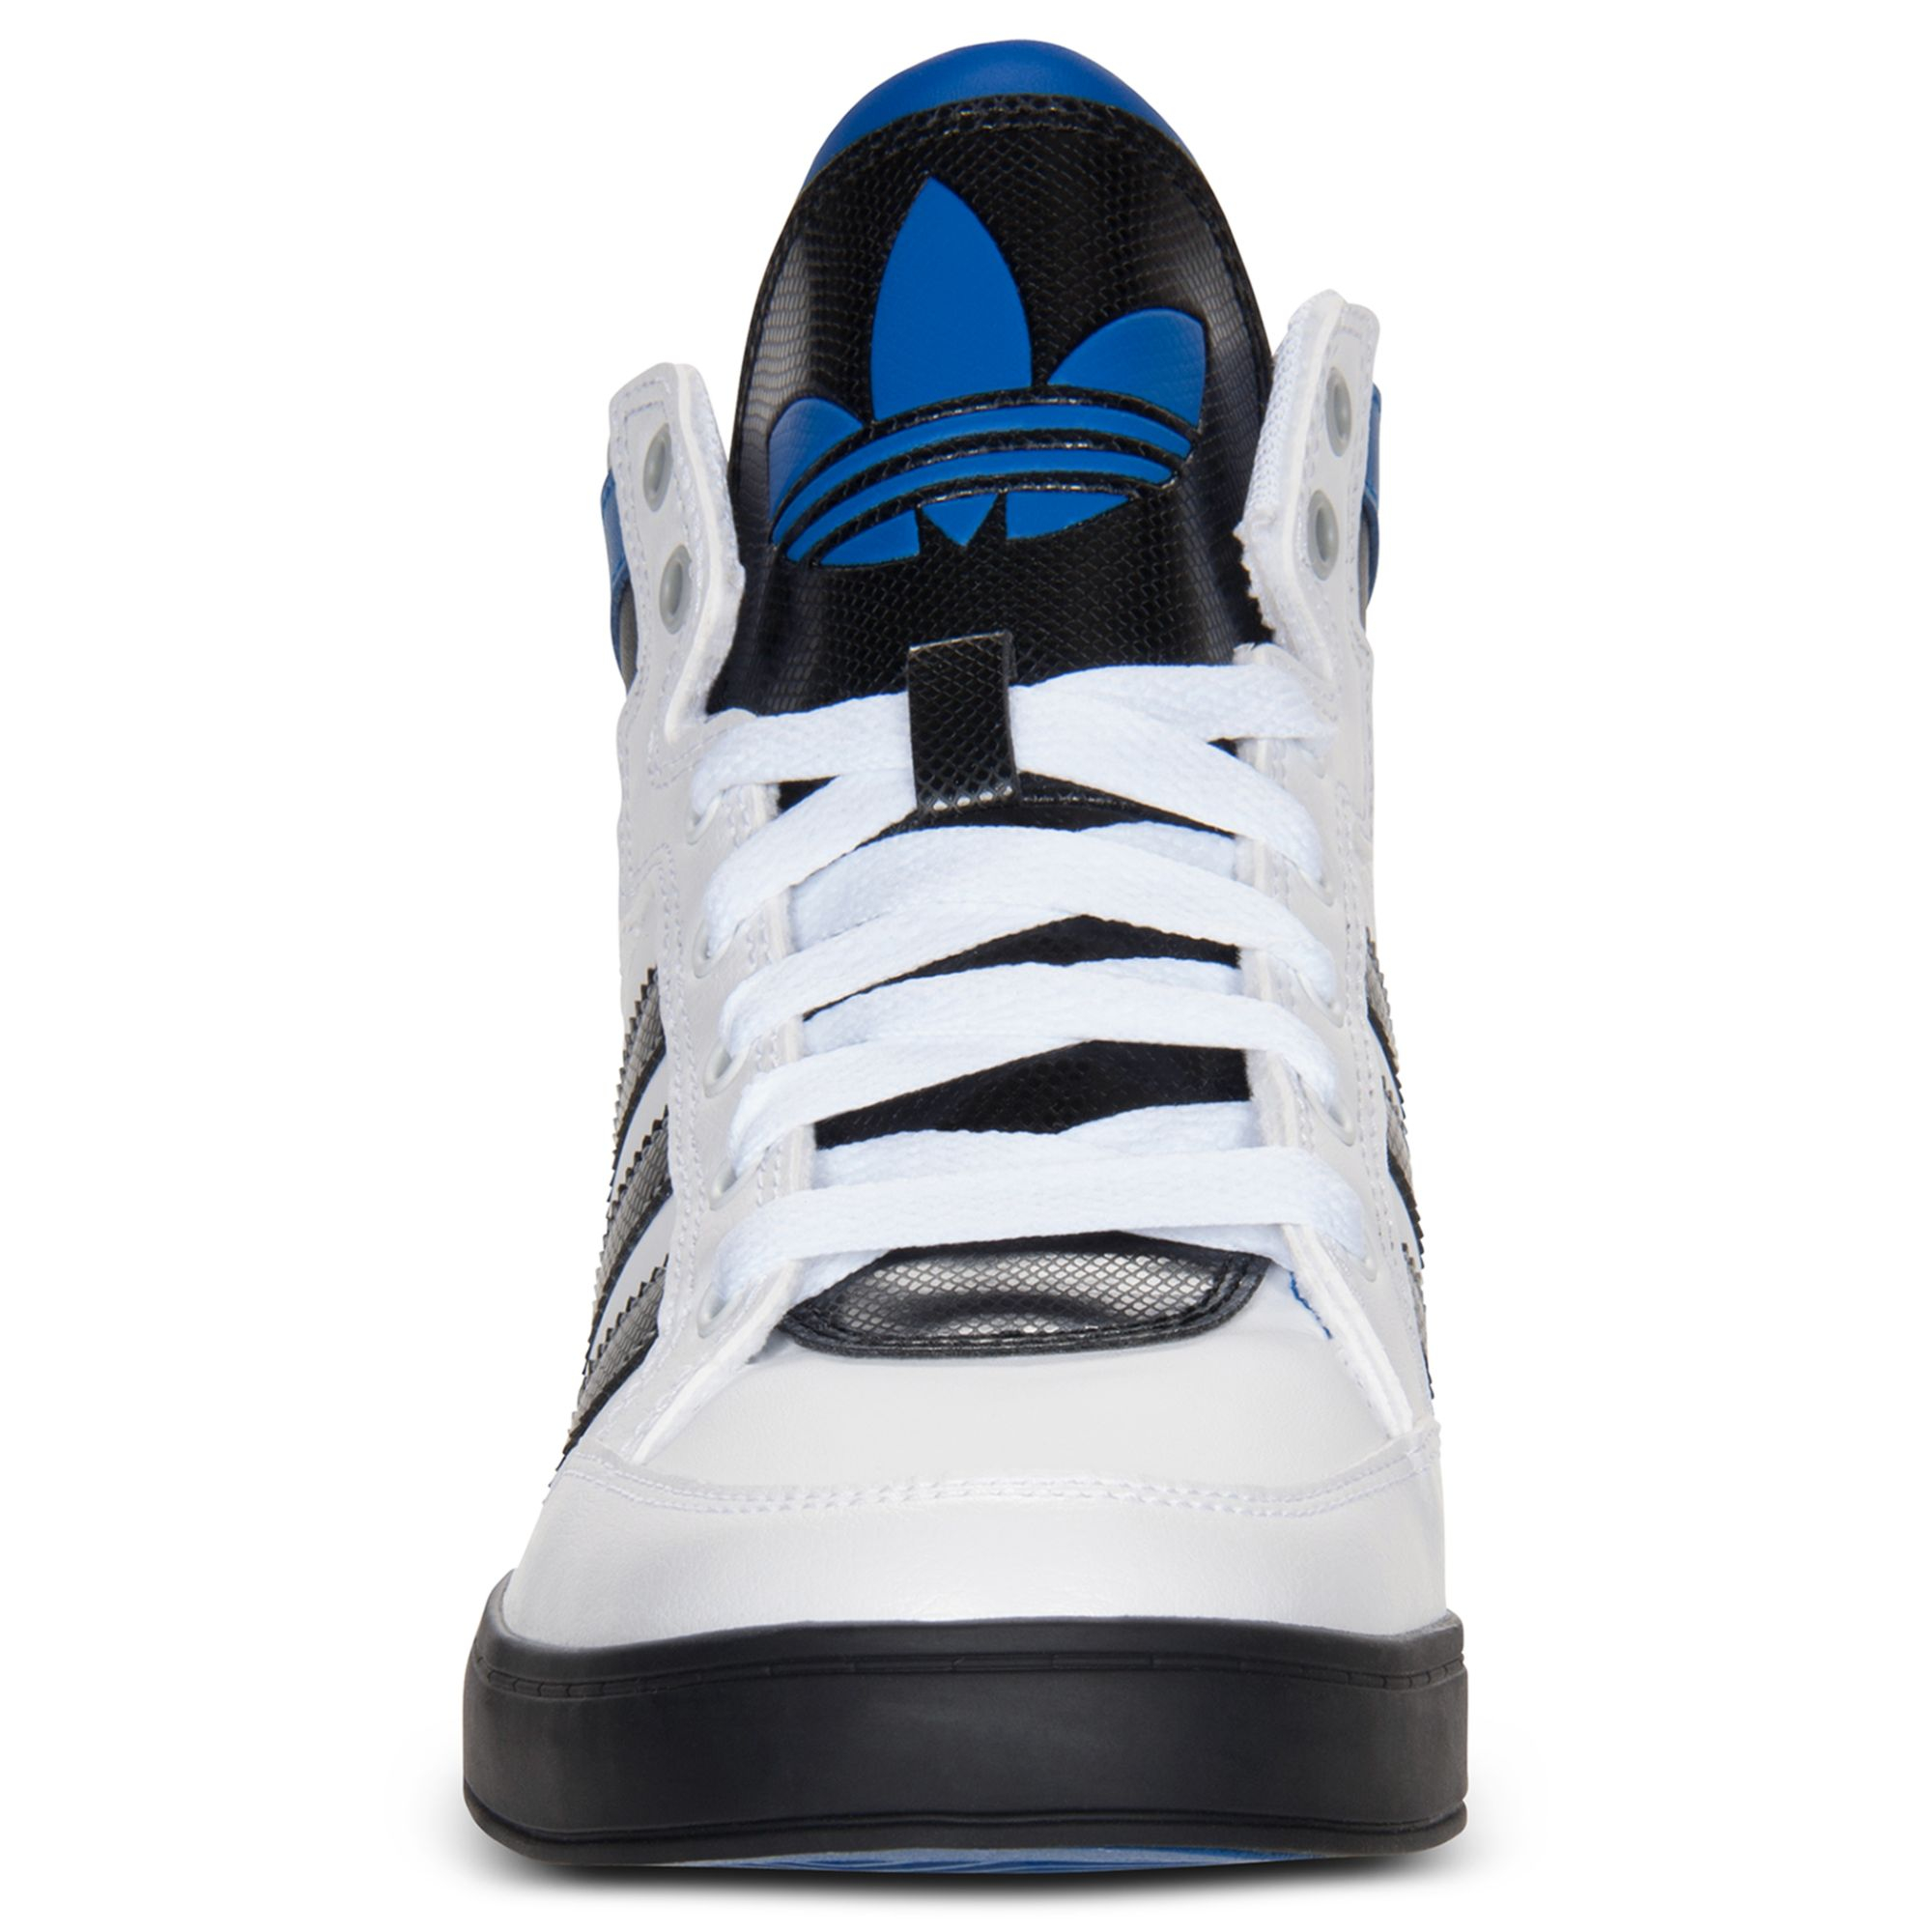 adidas Originals Hard Court Hi Casual Sneakers in White/Black/Blue (Black)  for Men - Lyst